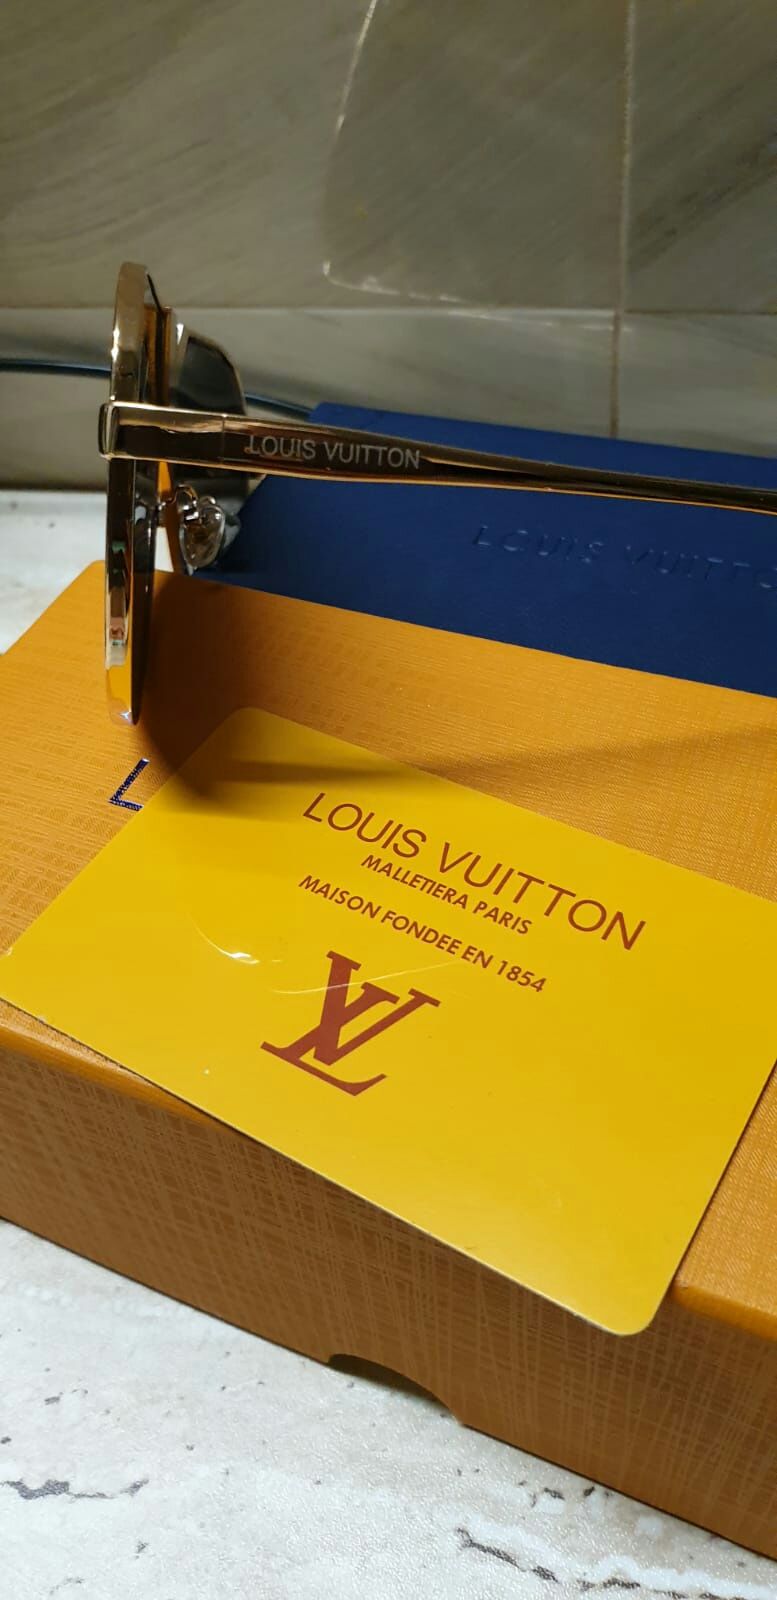 Ochelari soare Louis Vuitton originali cutie Potigrafu • OLX.ro